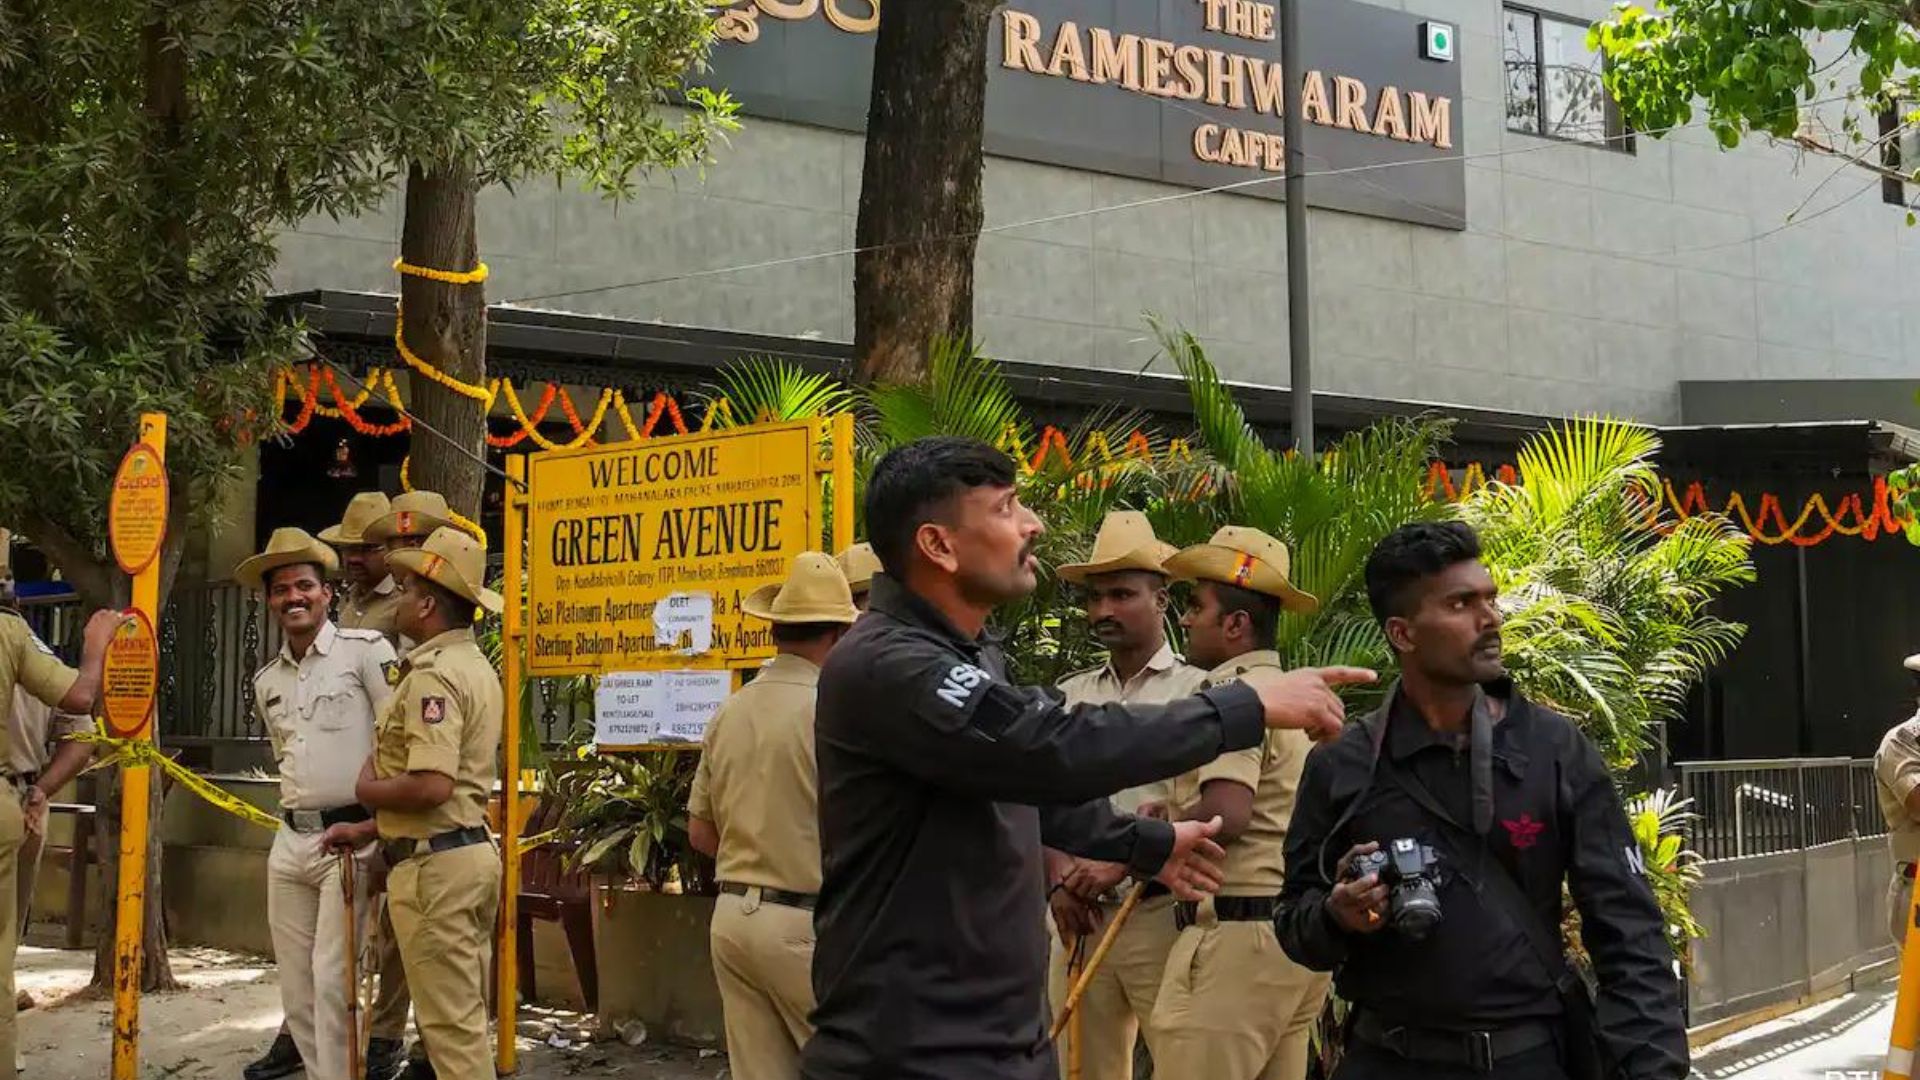 NIA Arrests Primary Suspect in Rameshwaram Cafe Bomb Blast